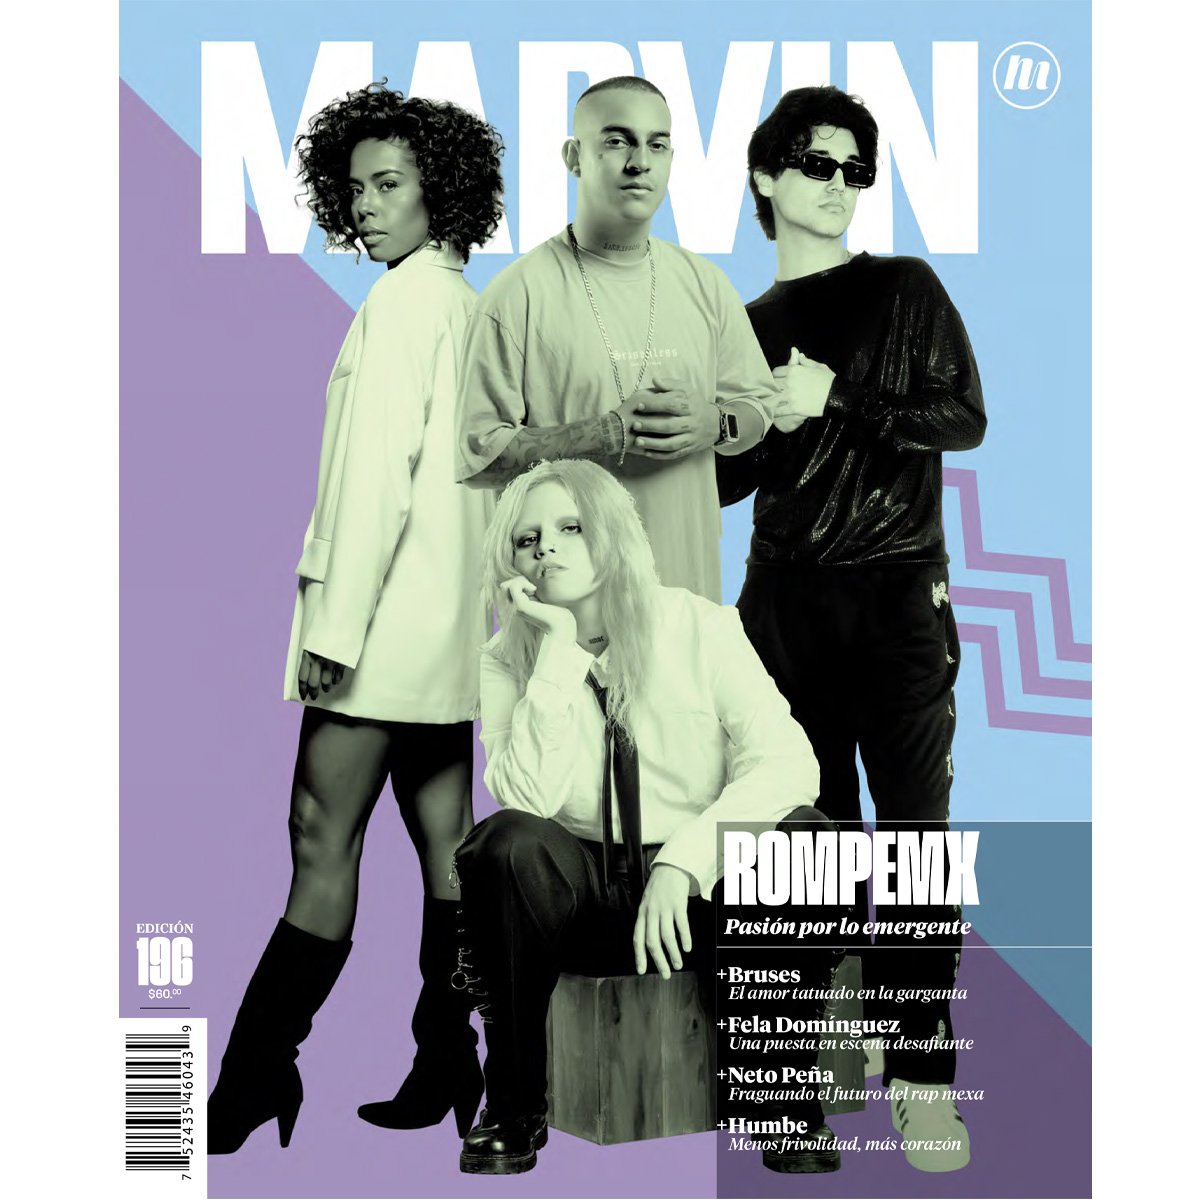 Marvin 196 - Dean Wareham | Mabe Fratti | Gilla Band | RompeMX